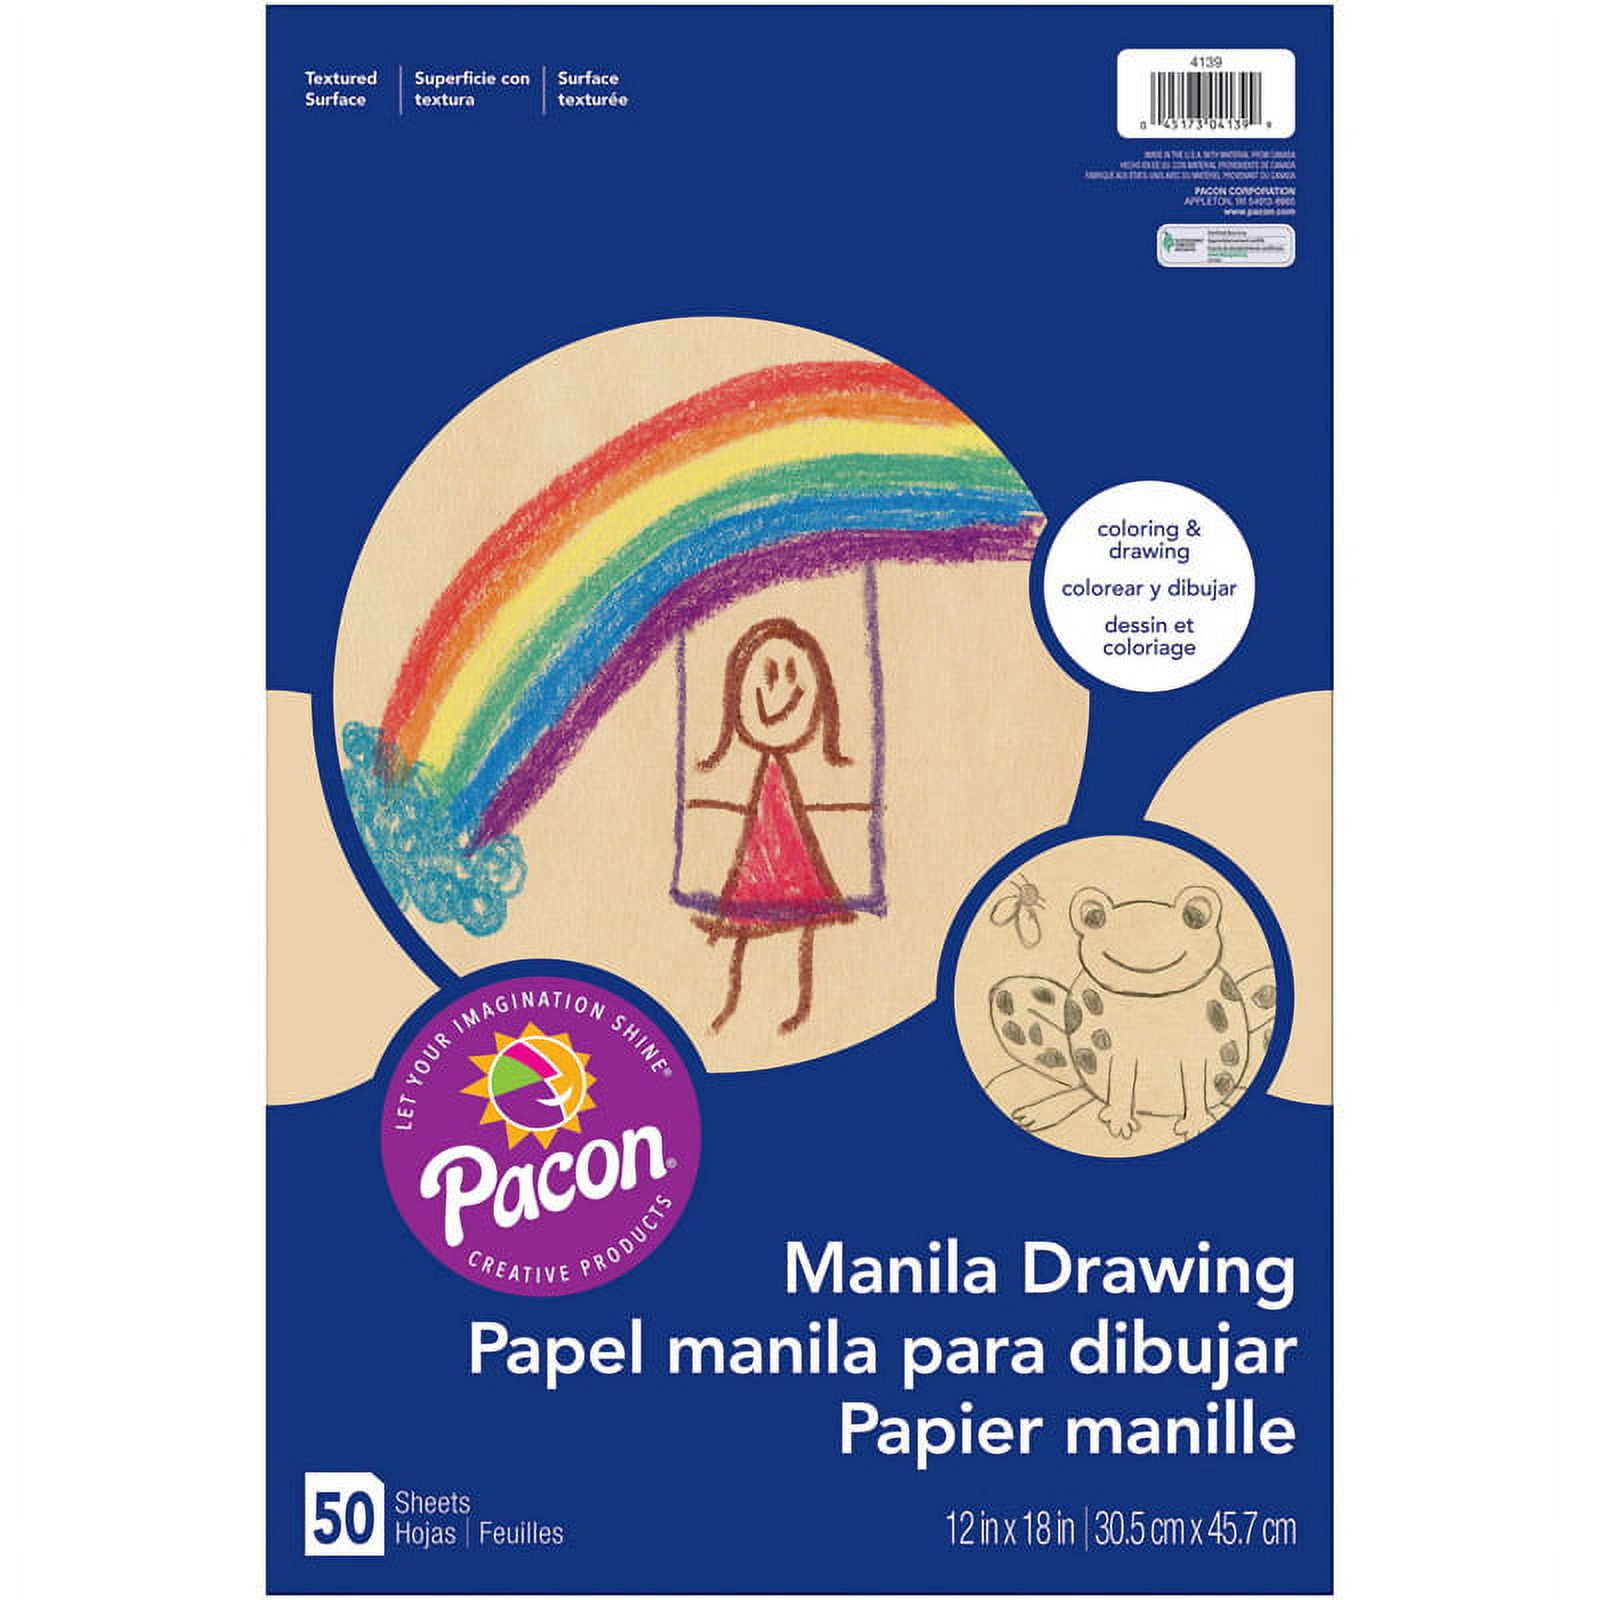 Lakeshore Manila Drawing Paper - 12 x 18 Pack of 500 Sheets